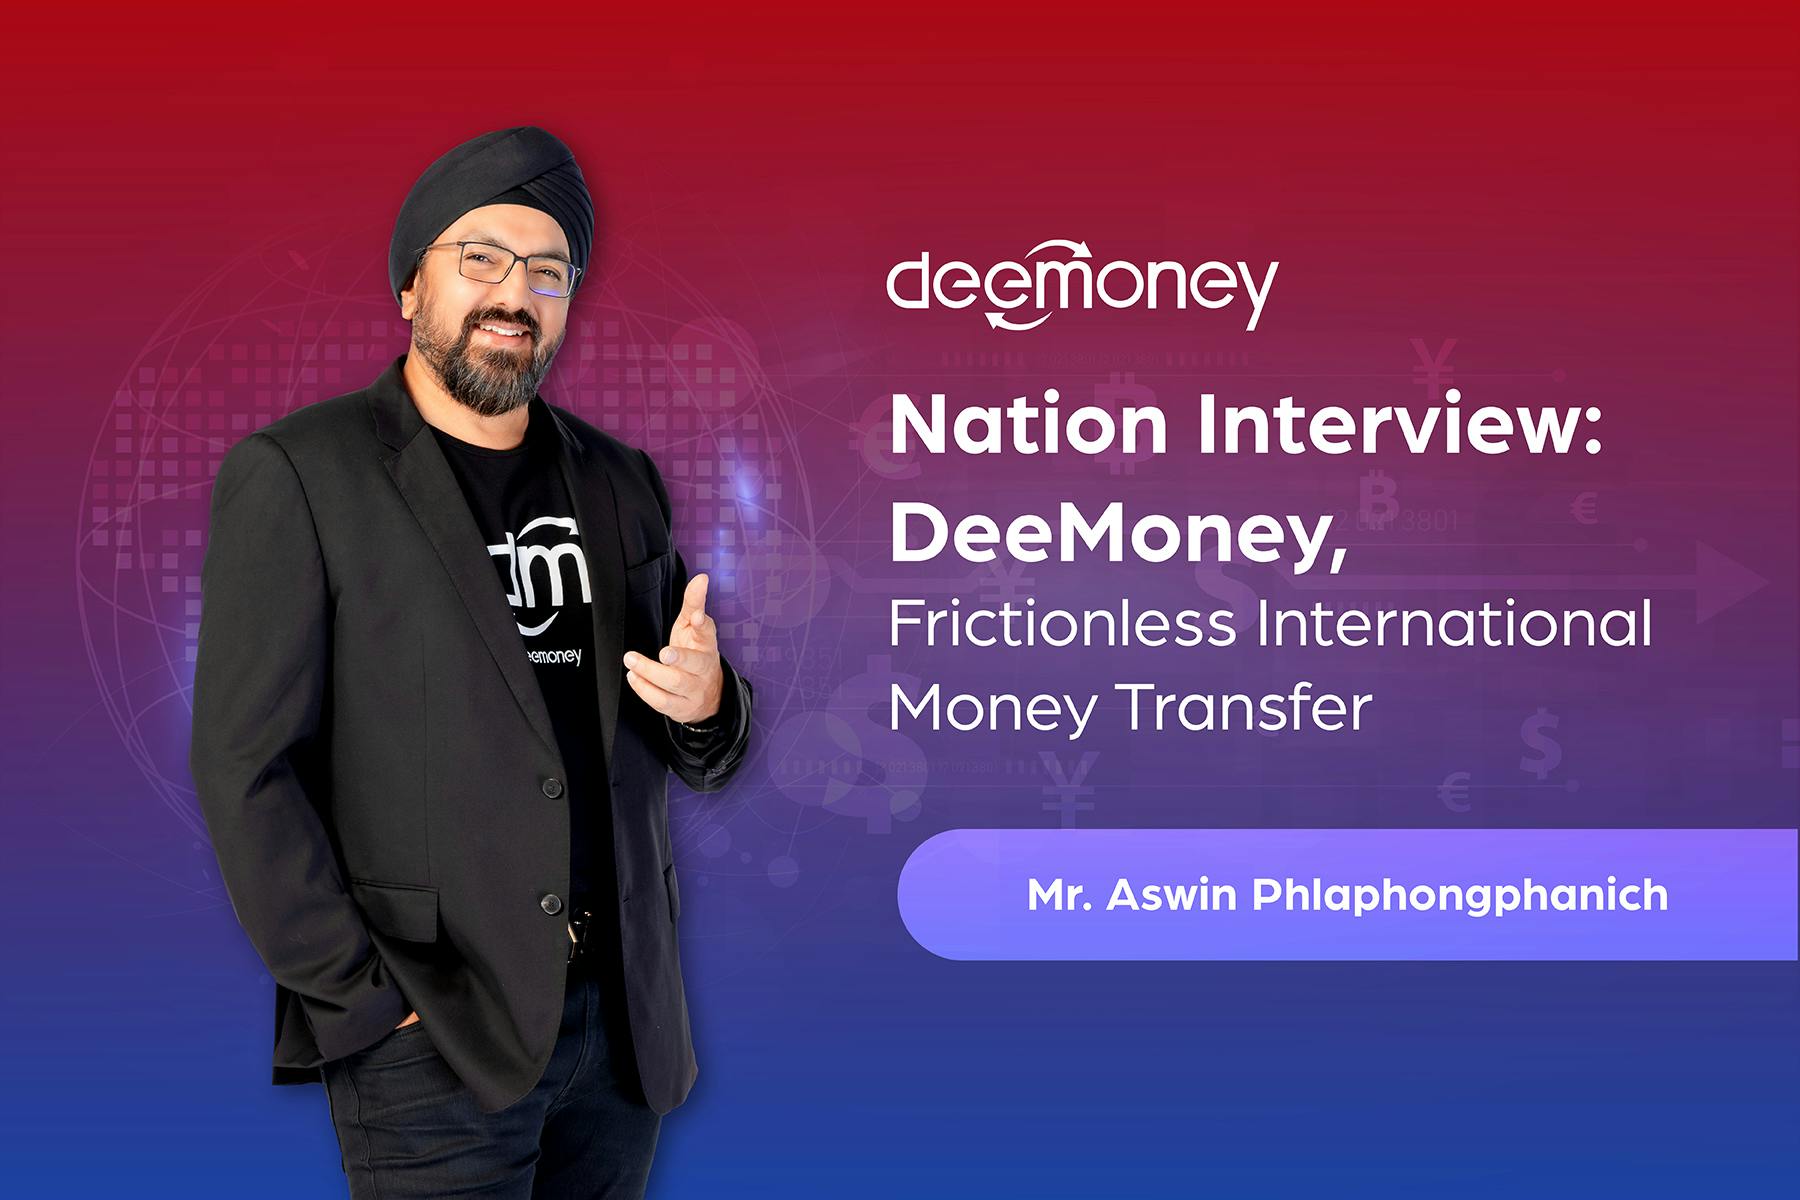 DeeMoney, Frictionless International Money Transfer